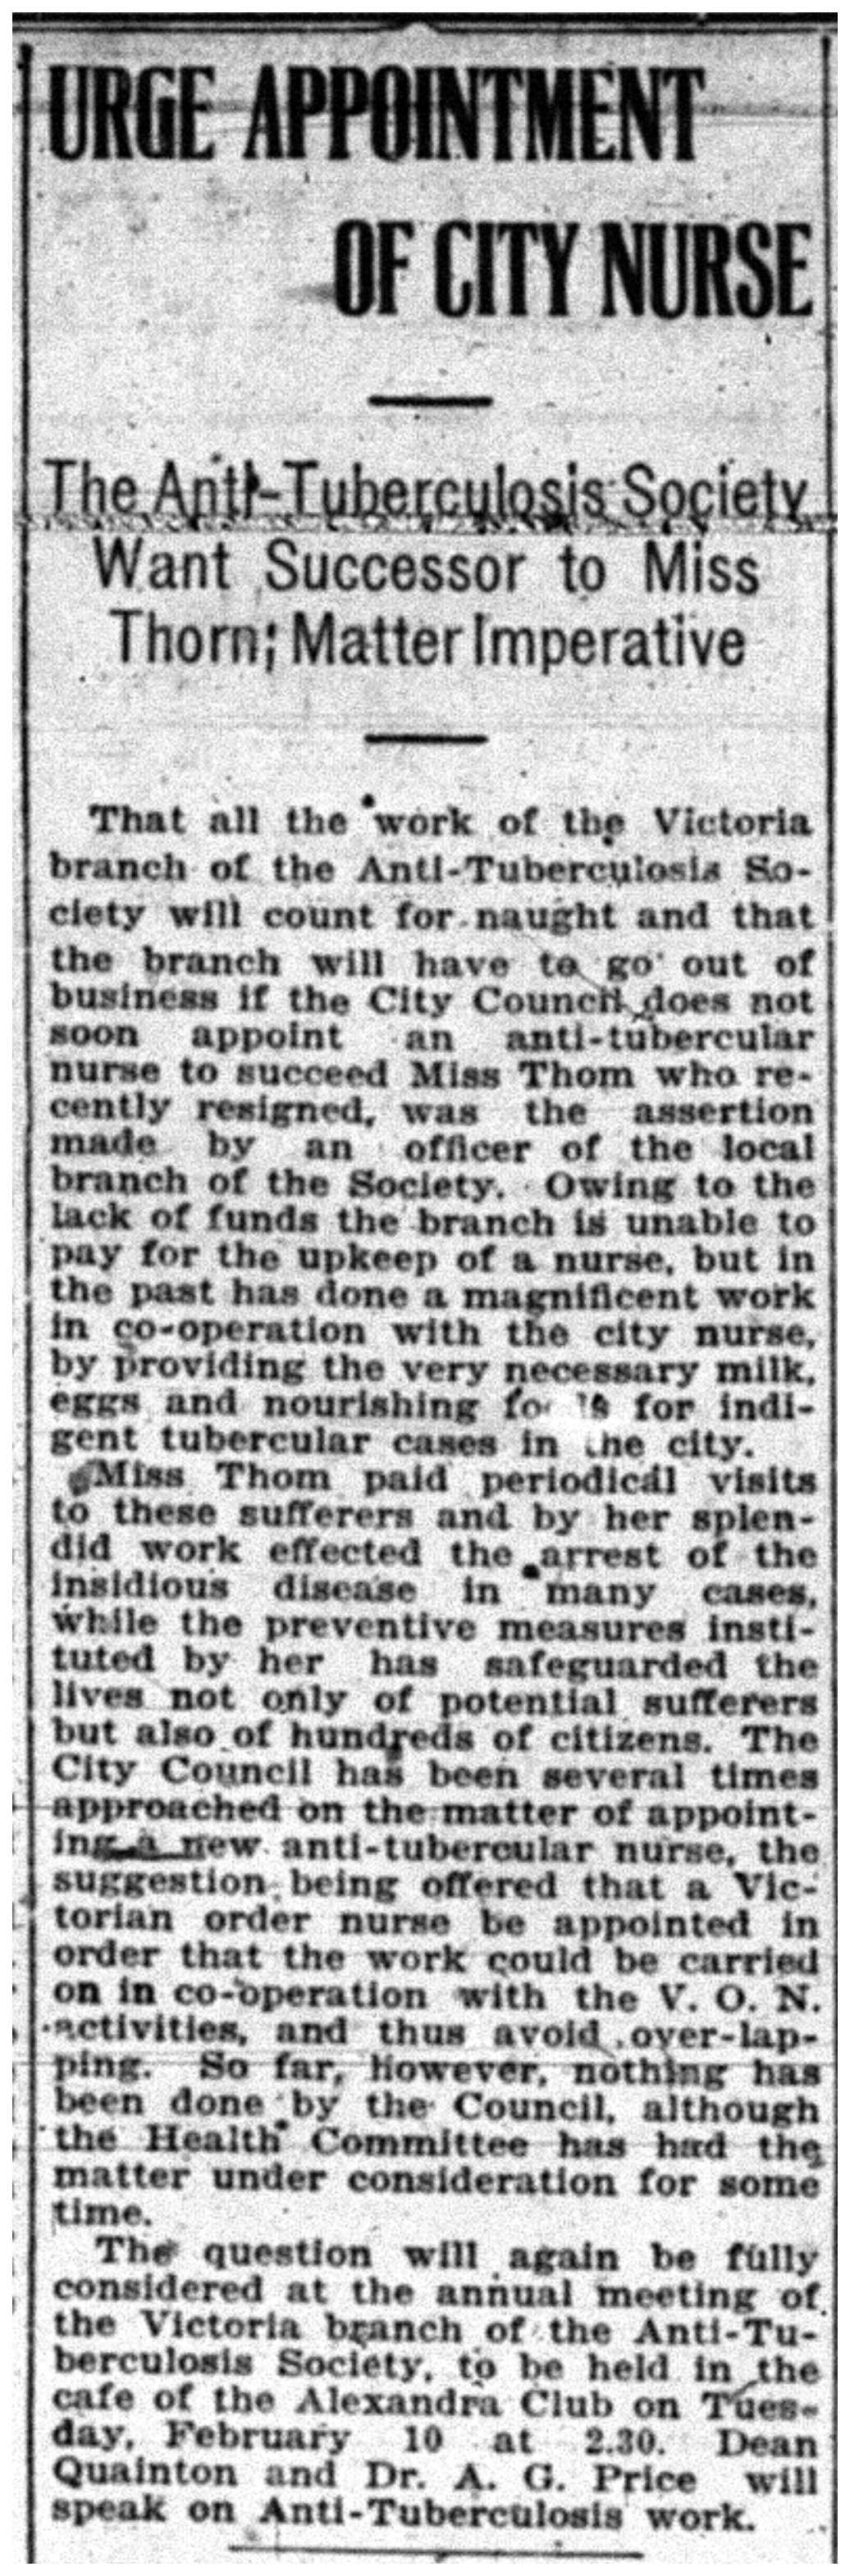 "Urge Appointment of City Nurse"